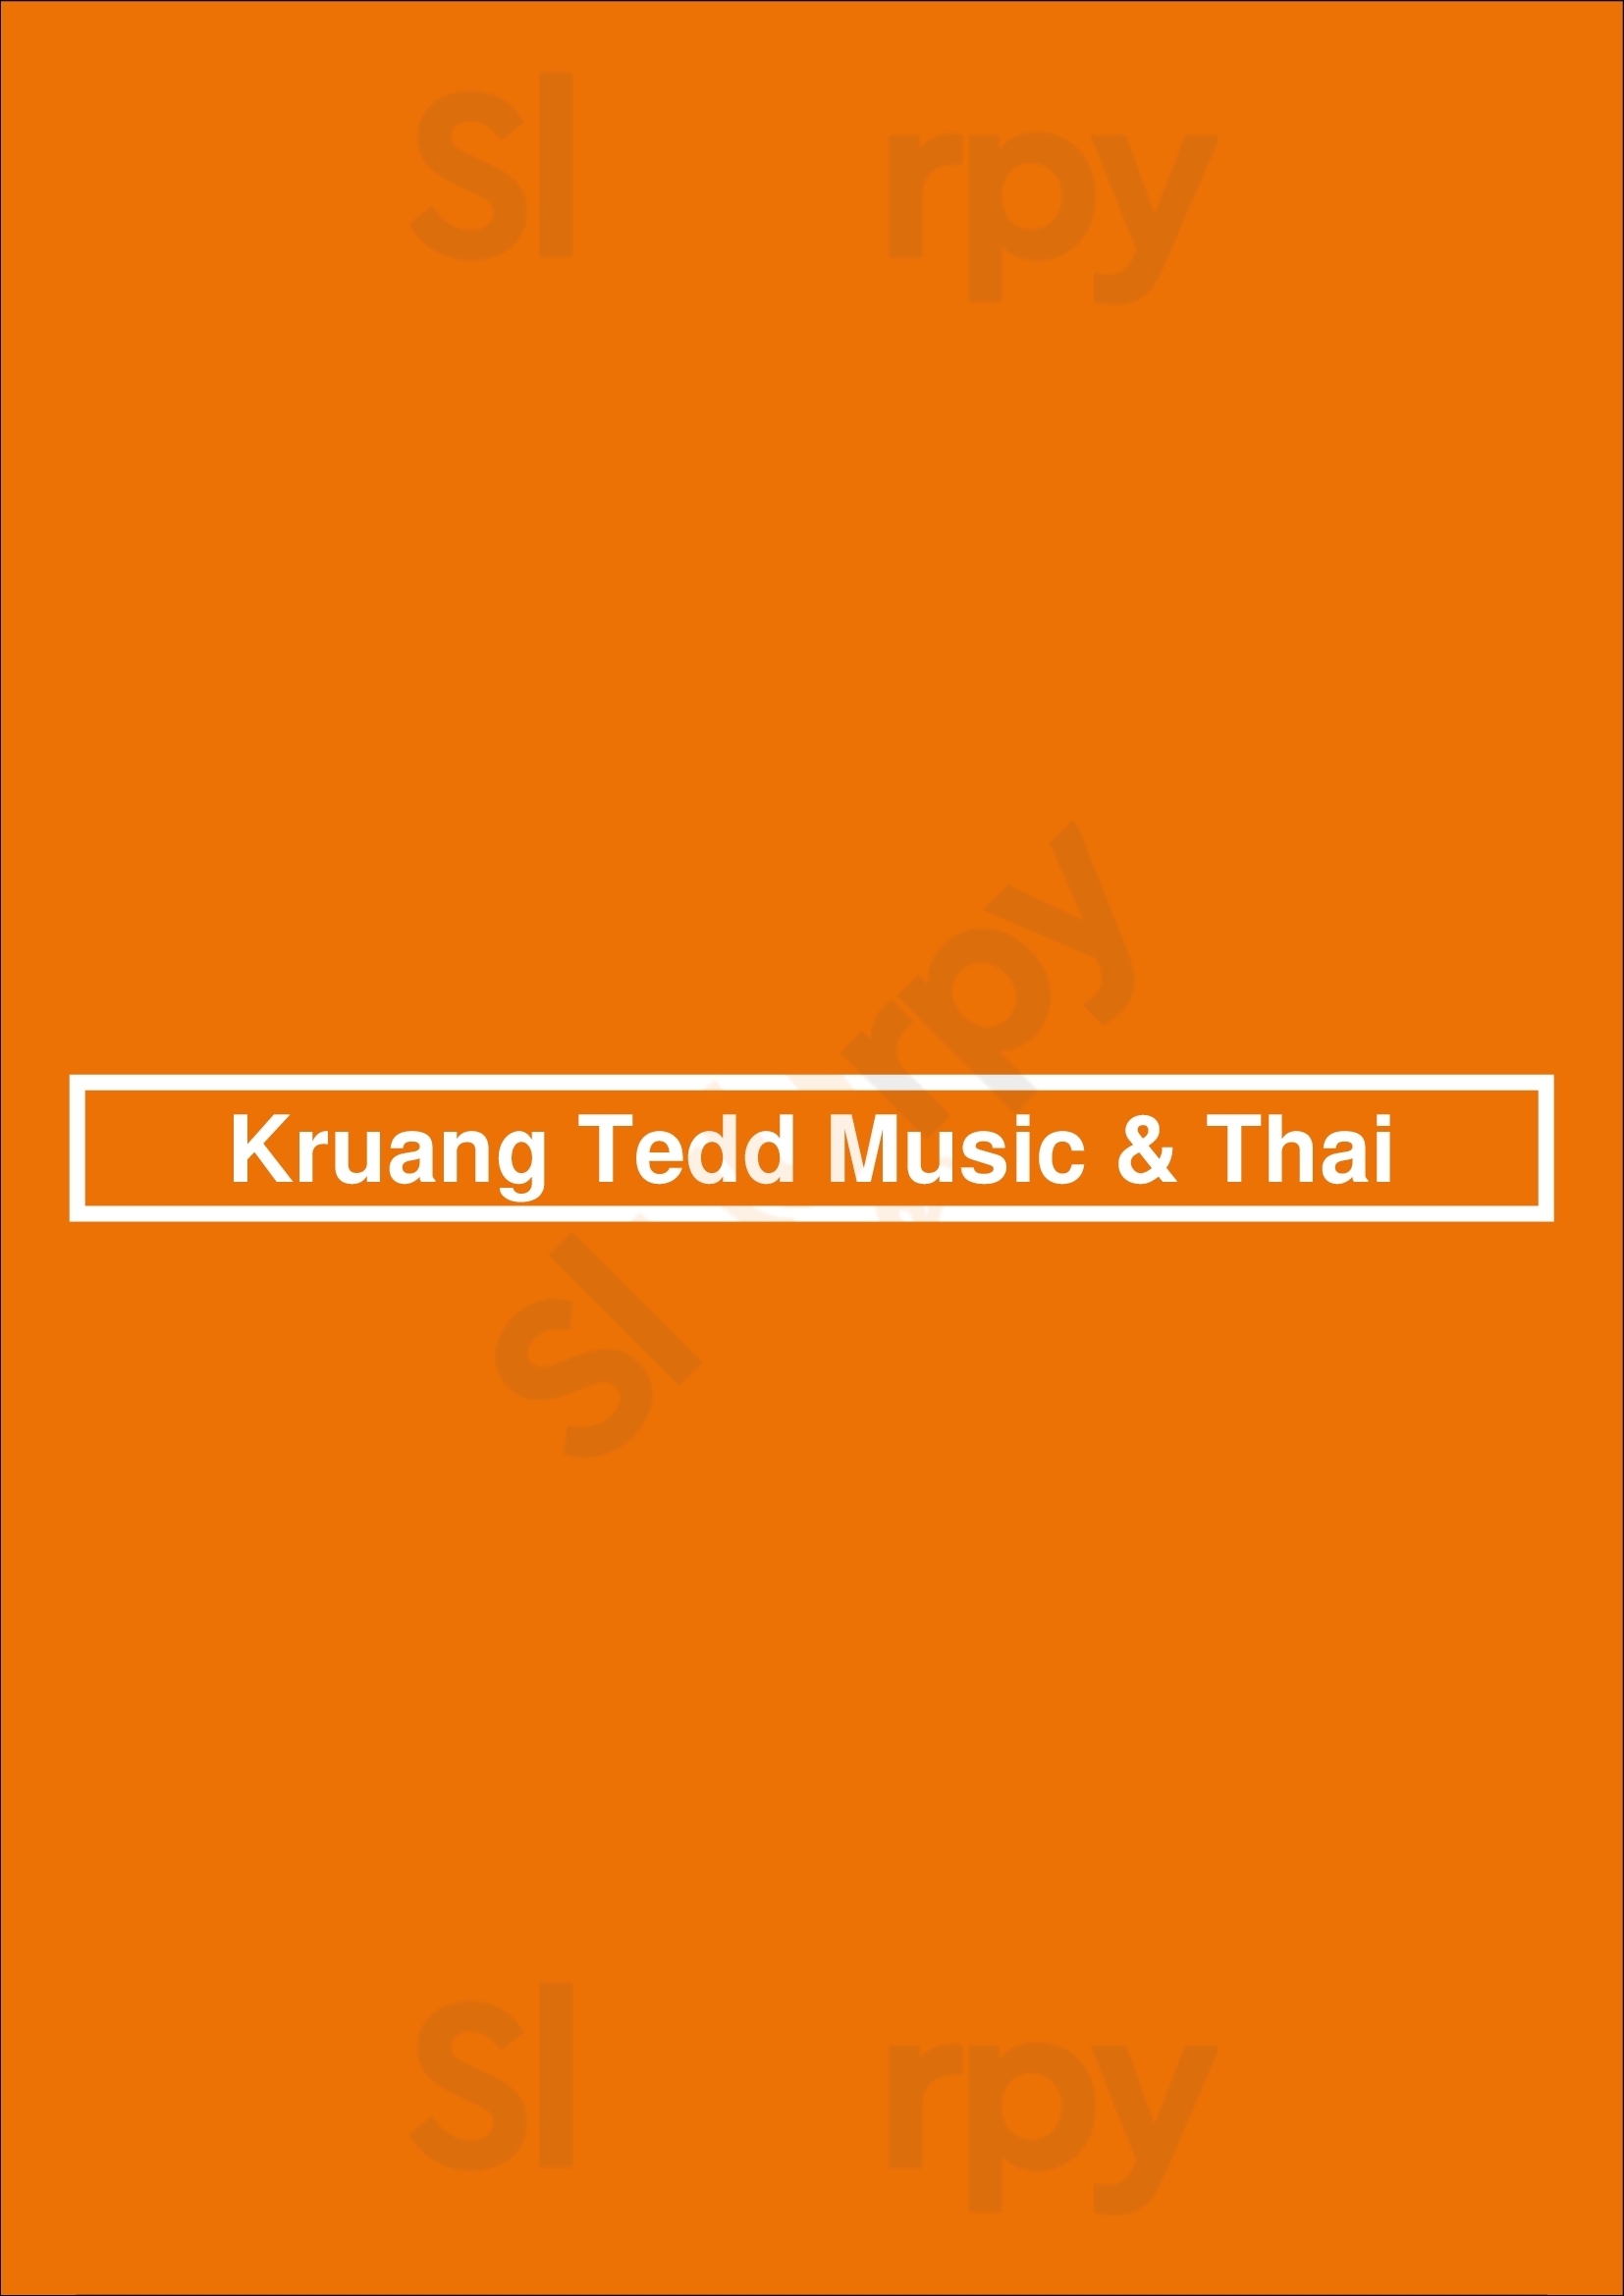 Kruang Tedd Music & Thai Los Angeles Menu - 1